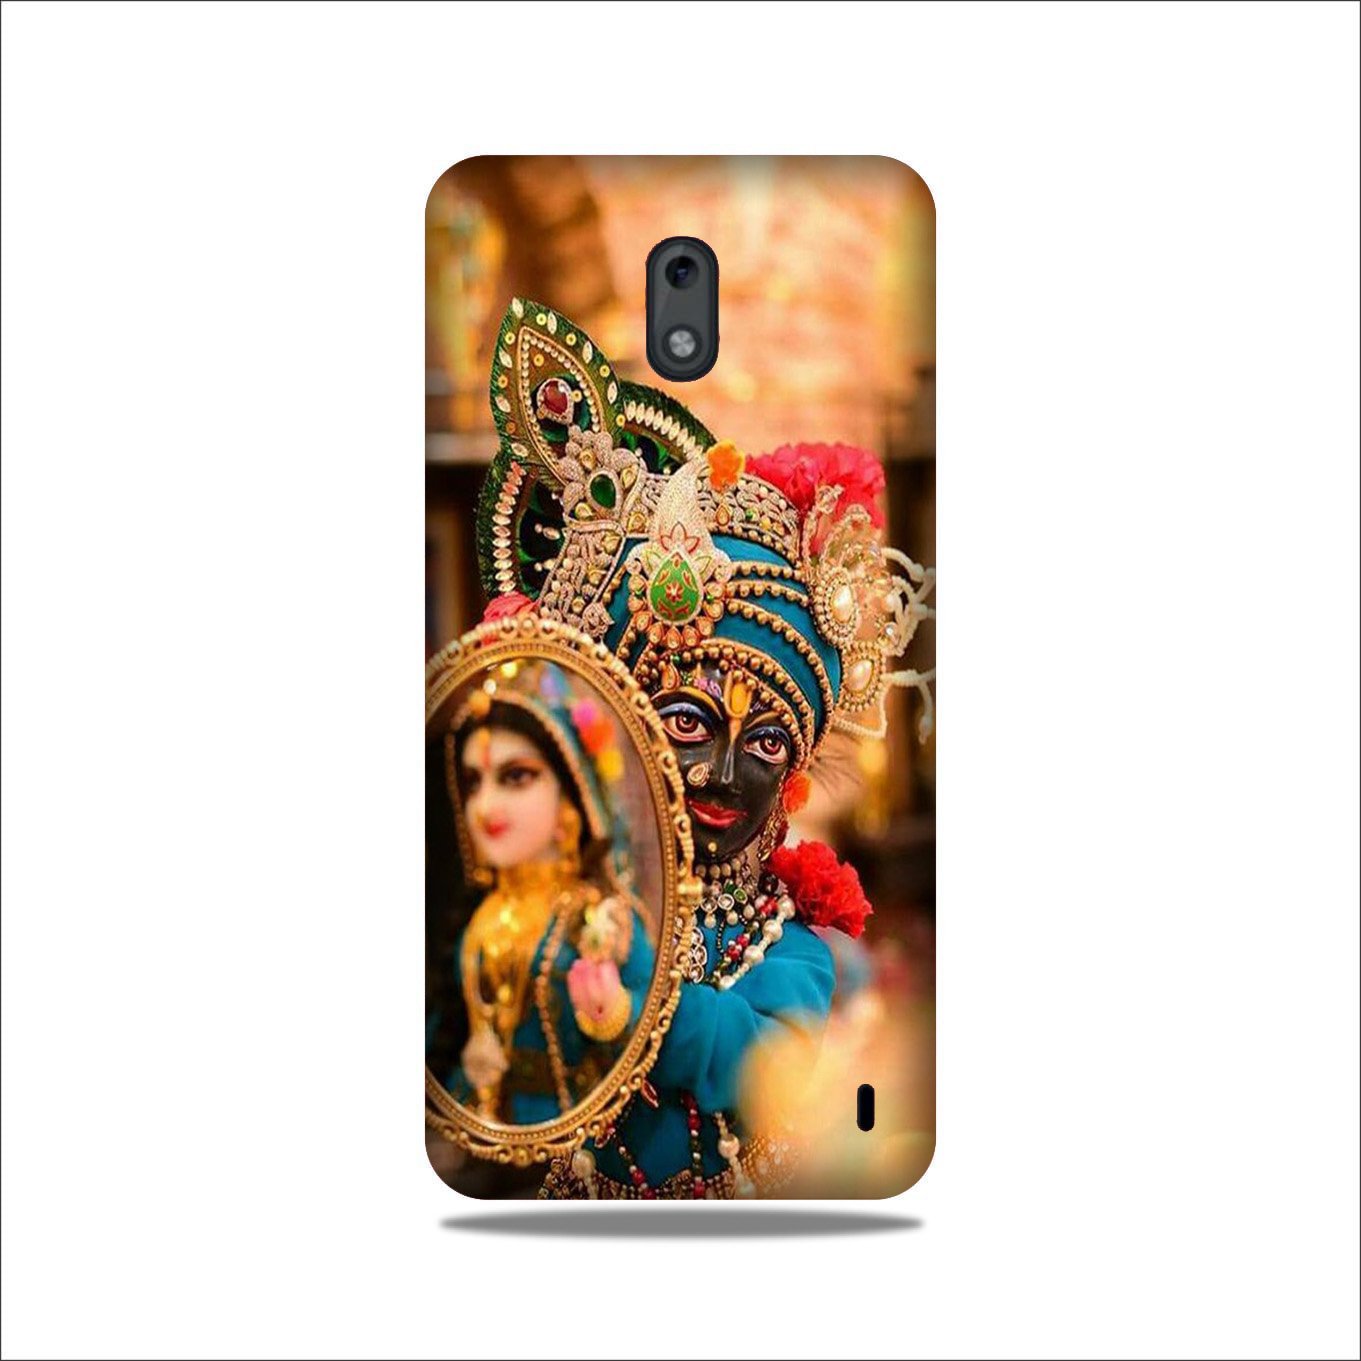 Lord Krishna5 Case for Nokia 3